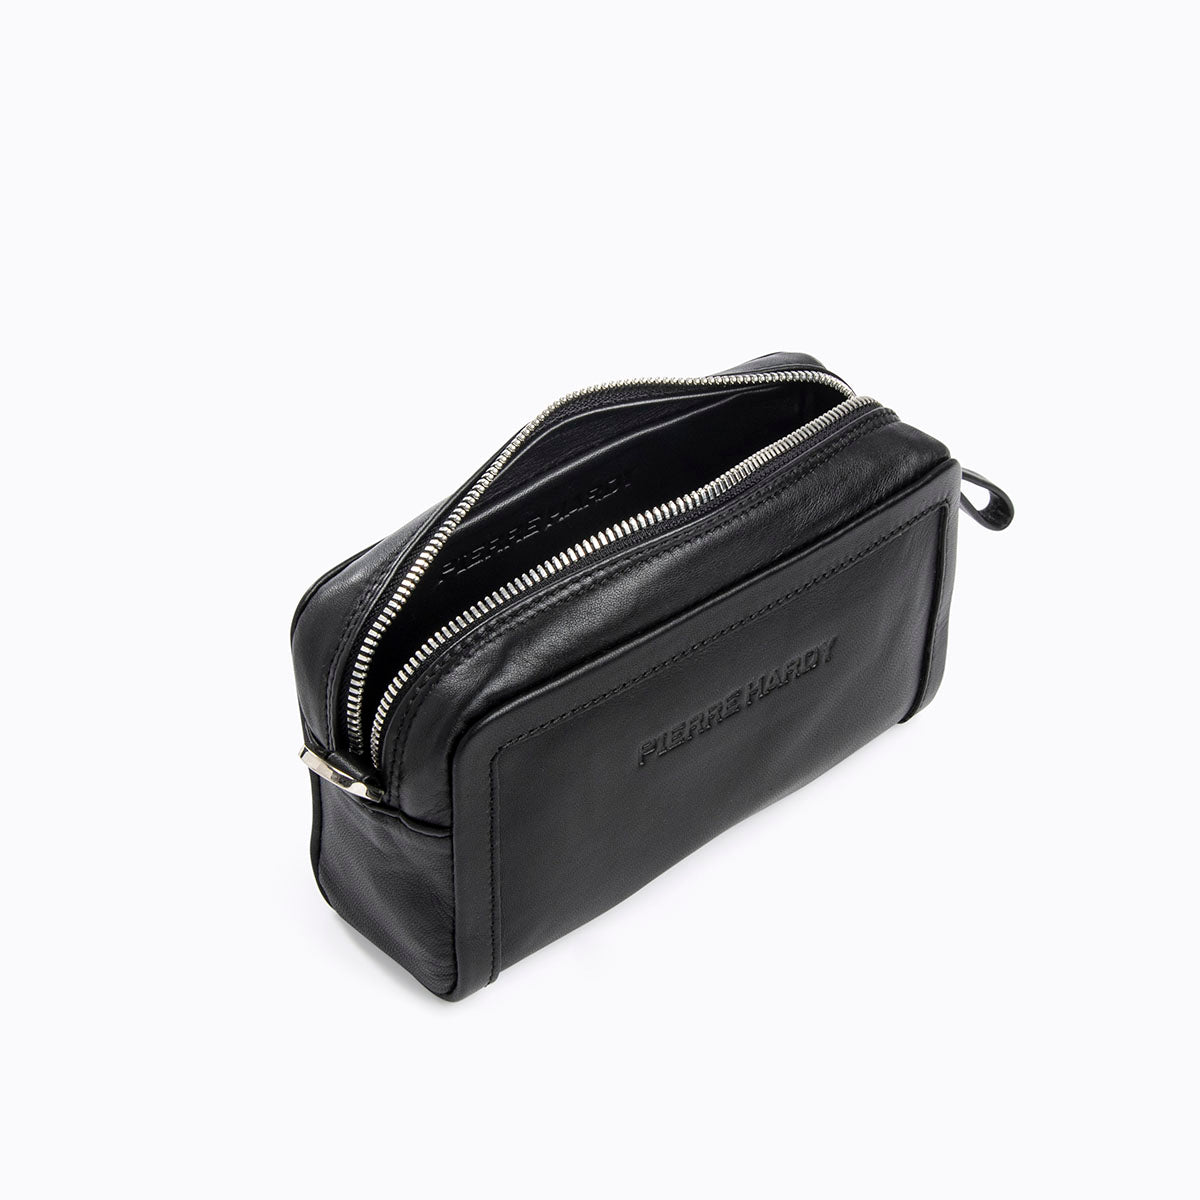 Pierre Hardy Cube Box Shoulder Bag in Black